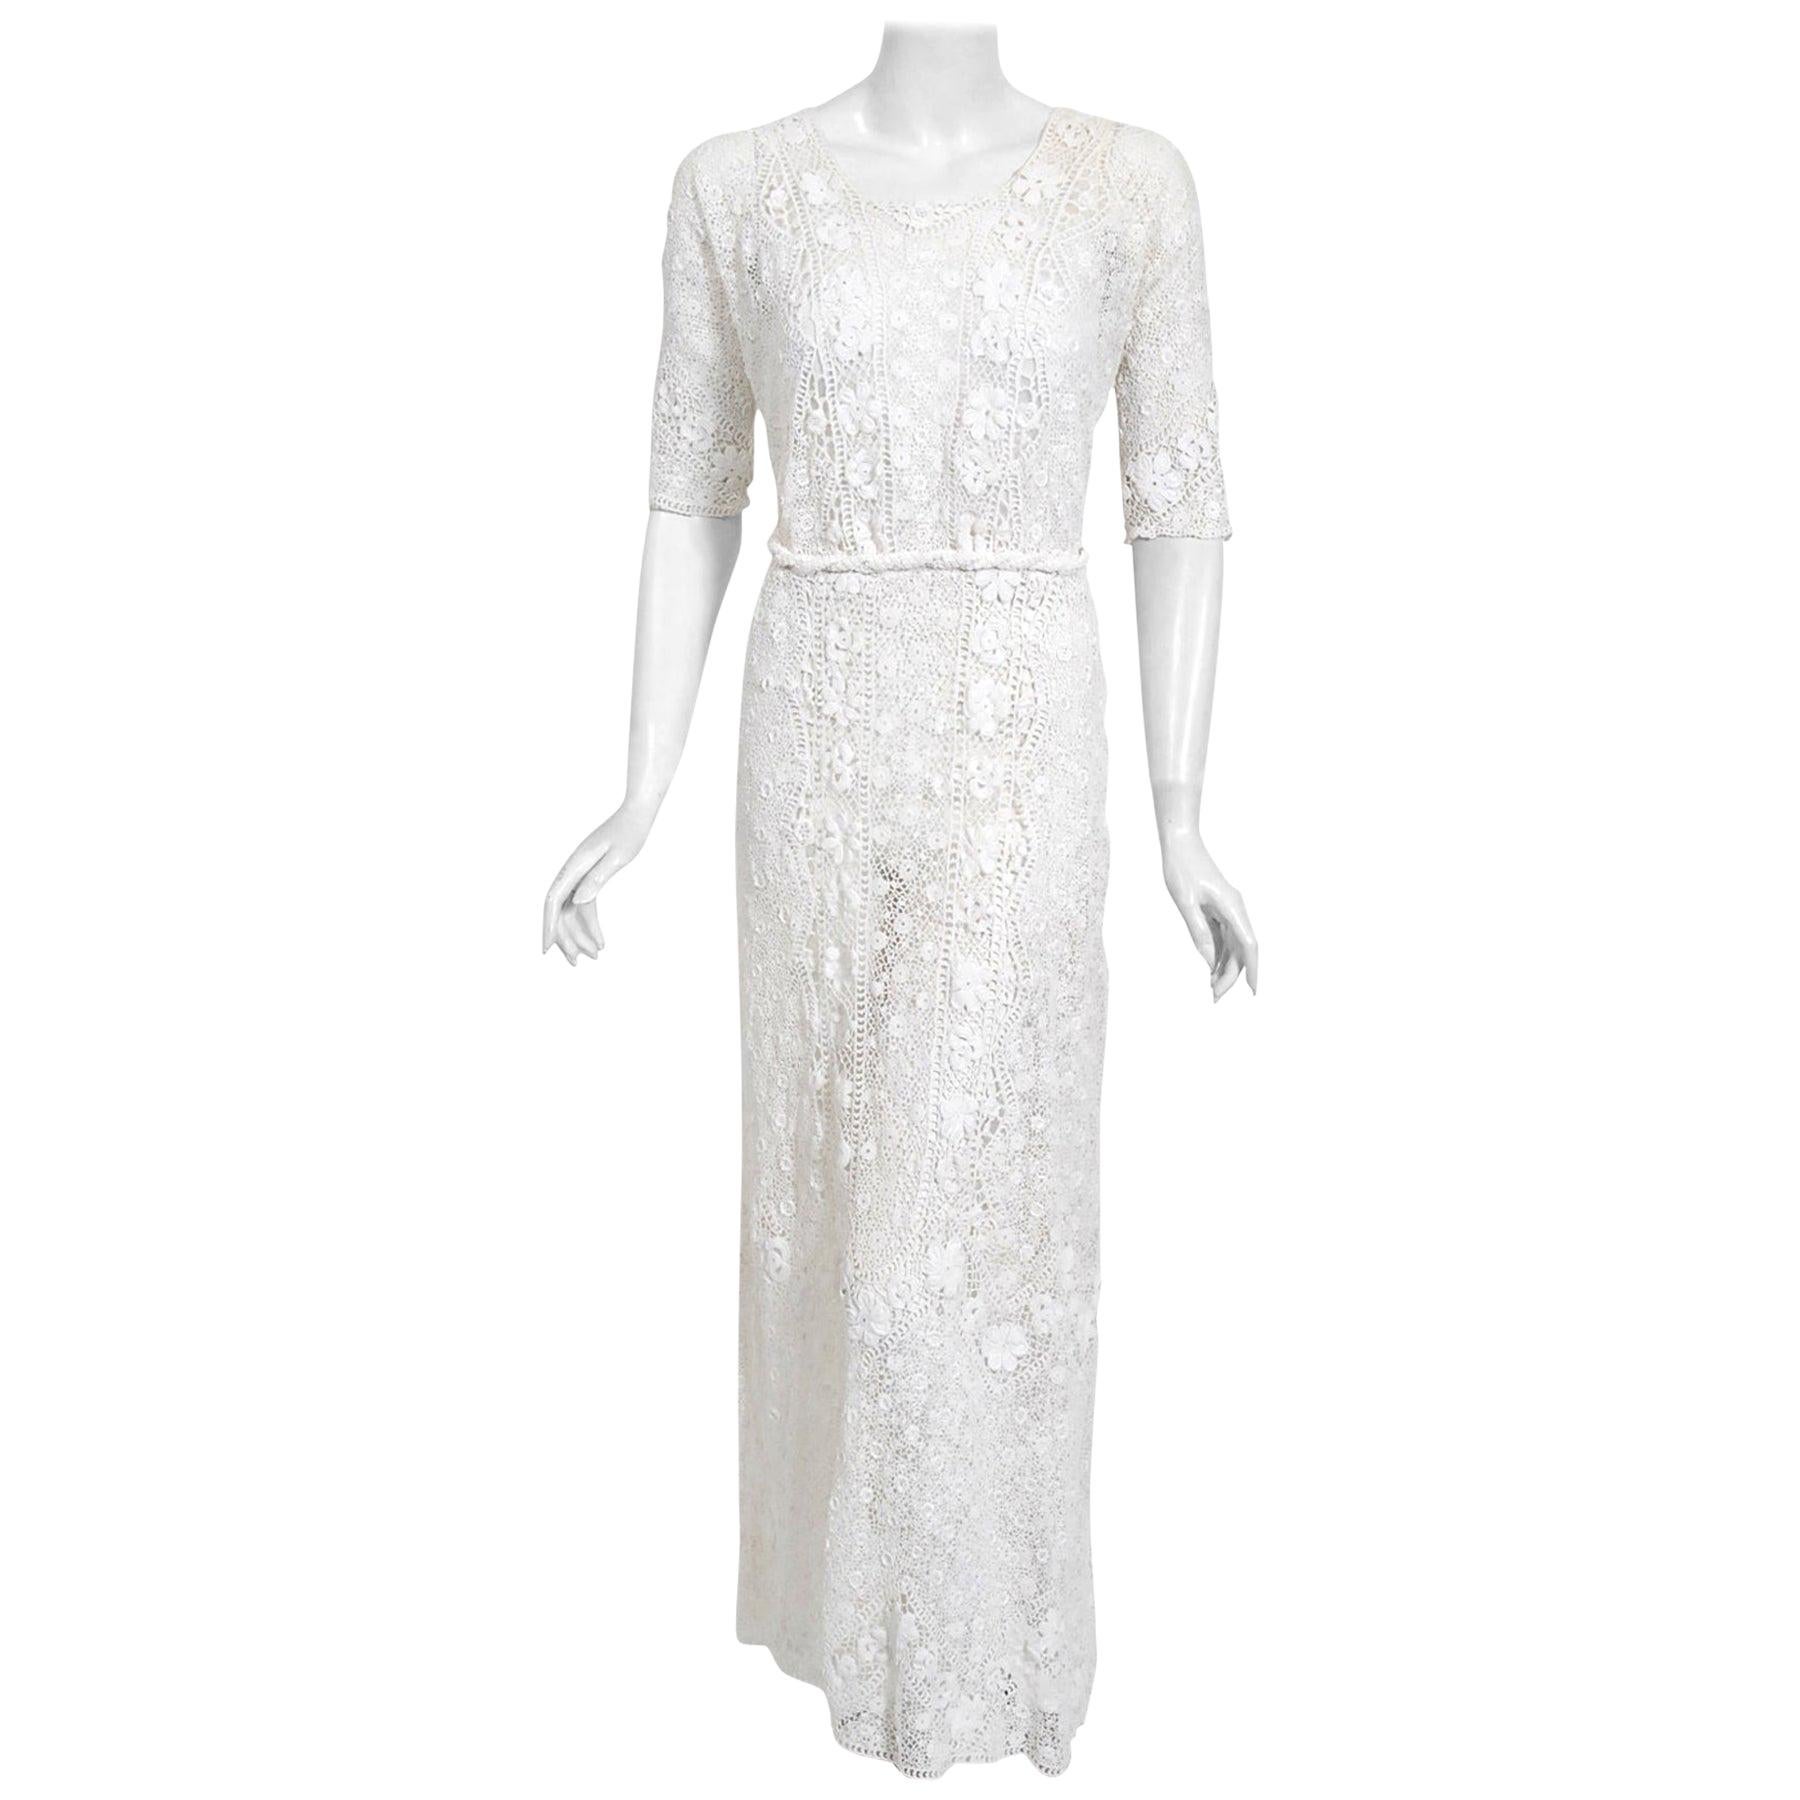 Antique 1910's Edwardian Couture White Irish-Crochet Lace Handmade Bridal Dress